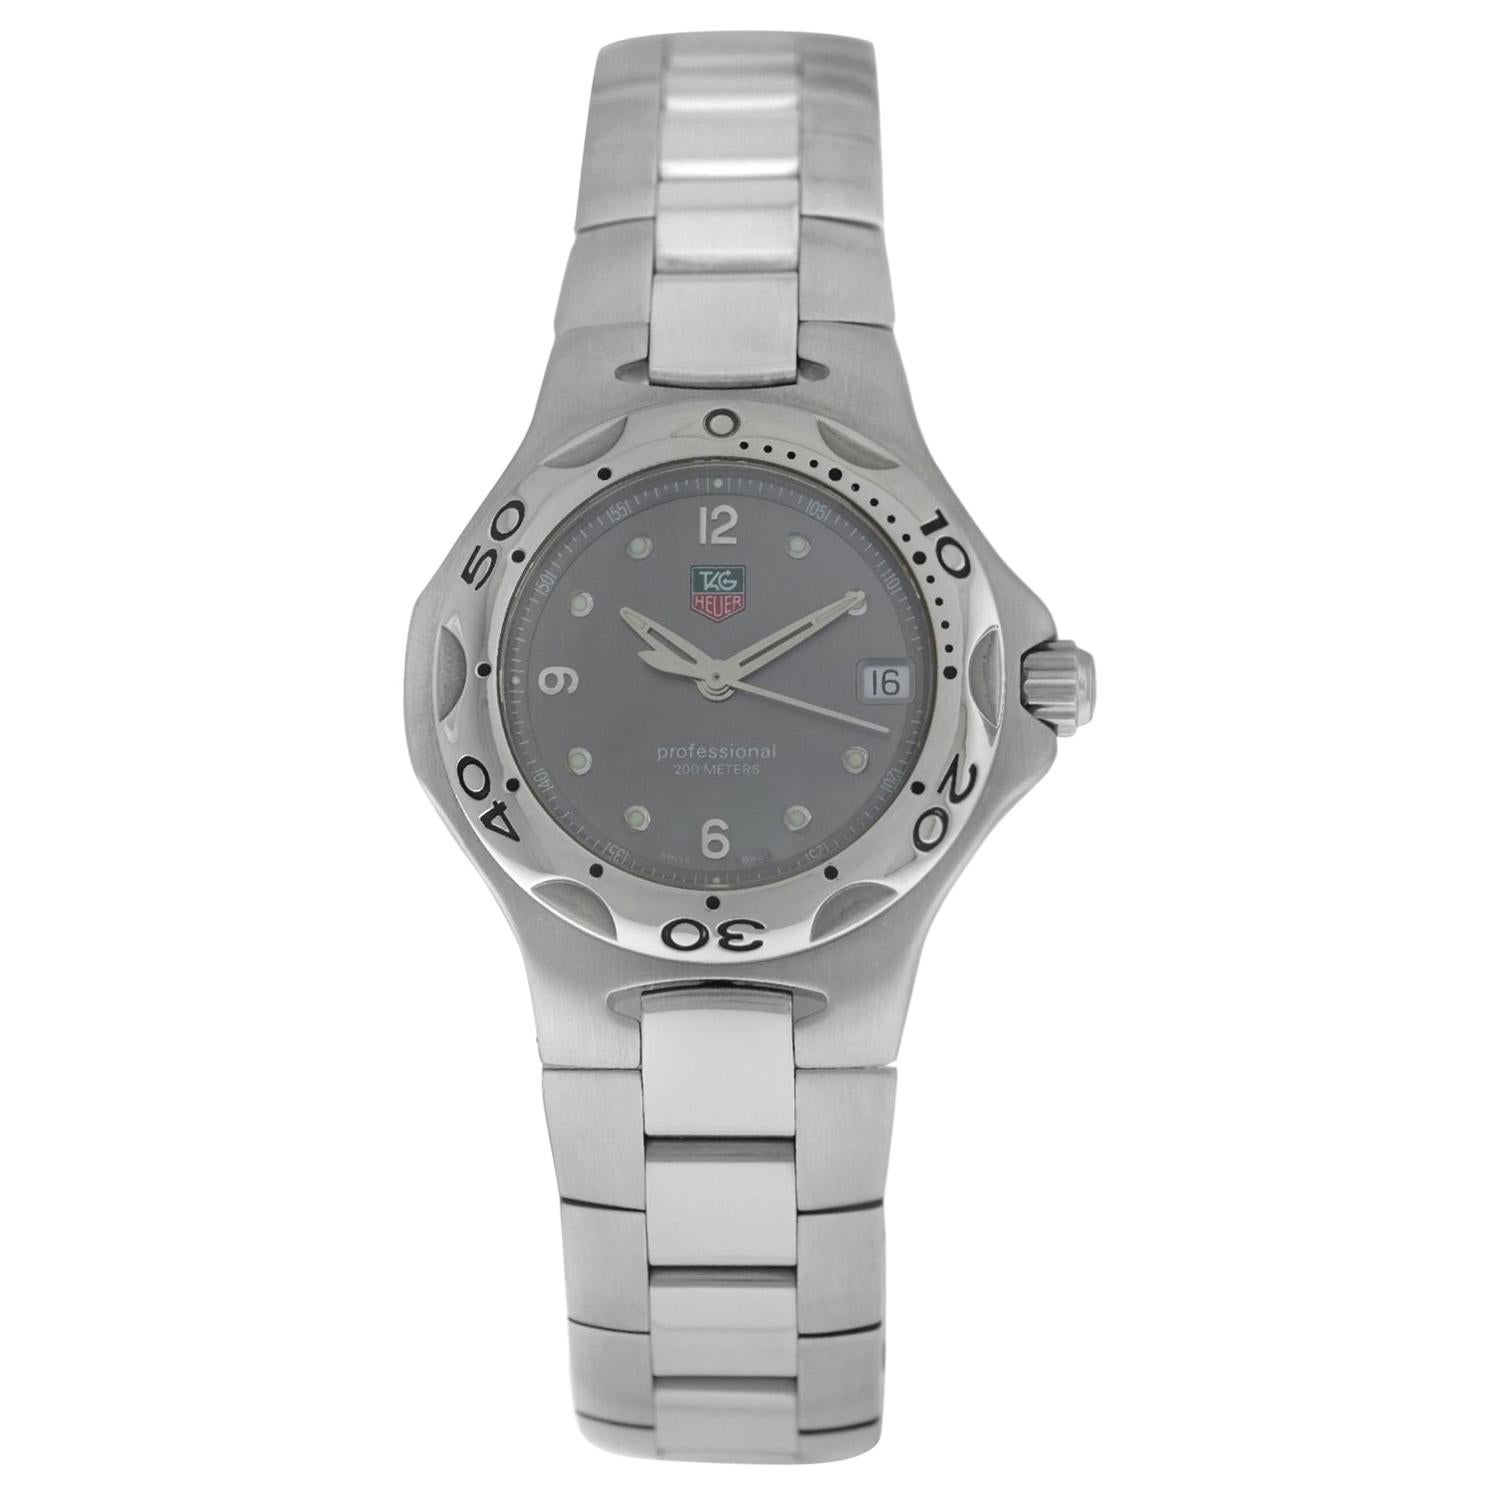 Unisex TAG Heuer Kirium WL1211-0 Stainless Steel Date 200M Quartz Watch For Sale